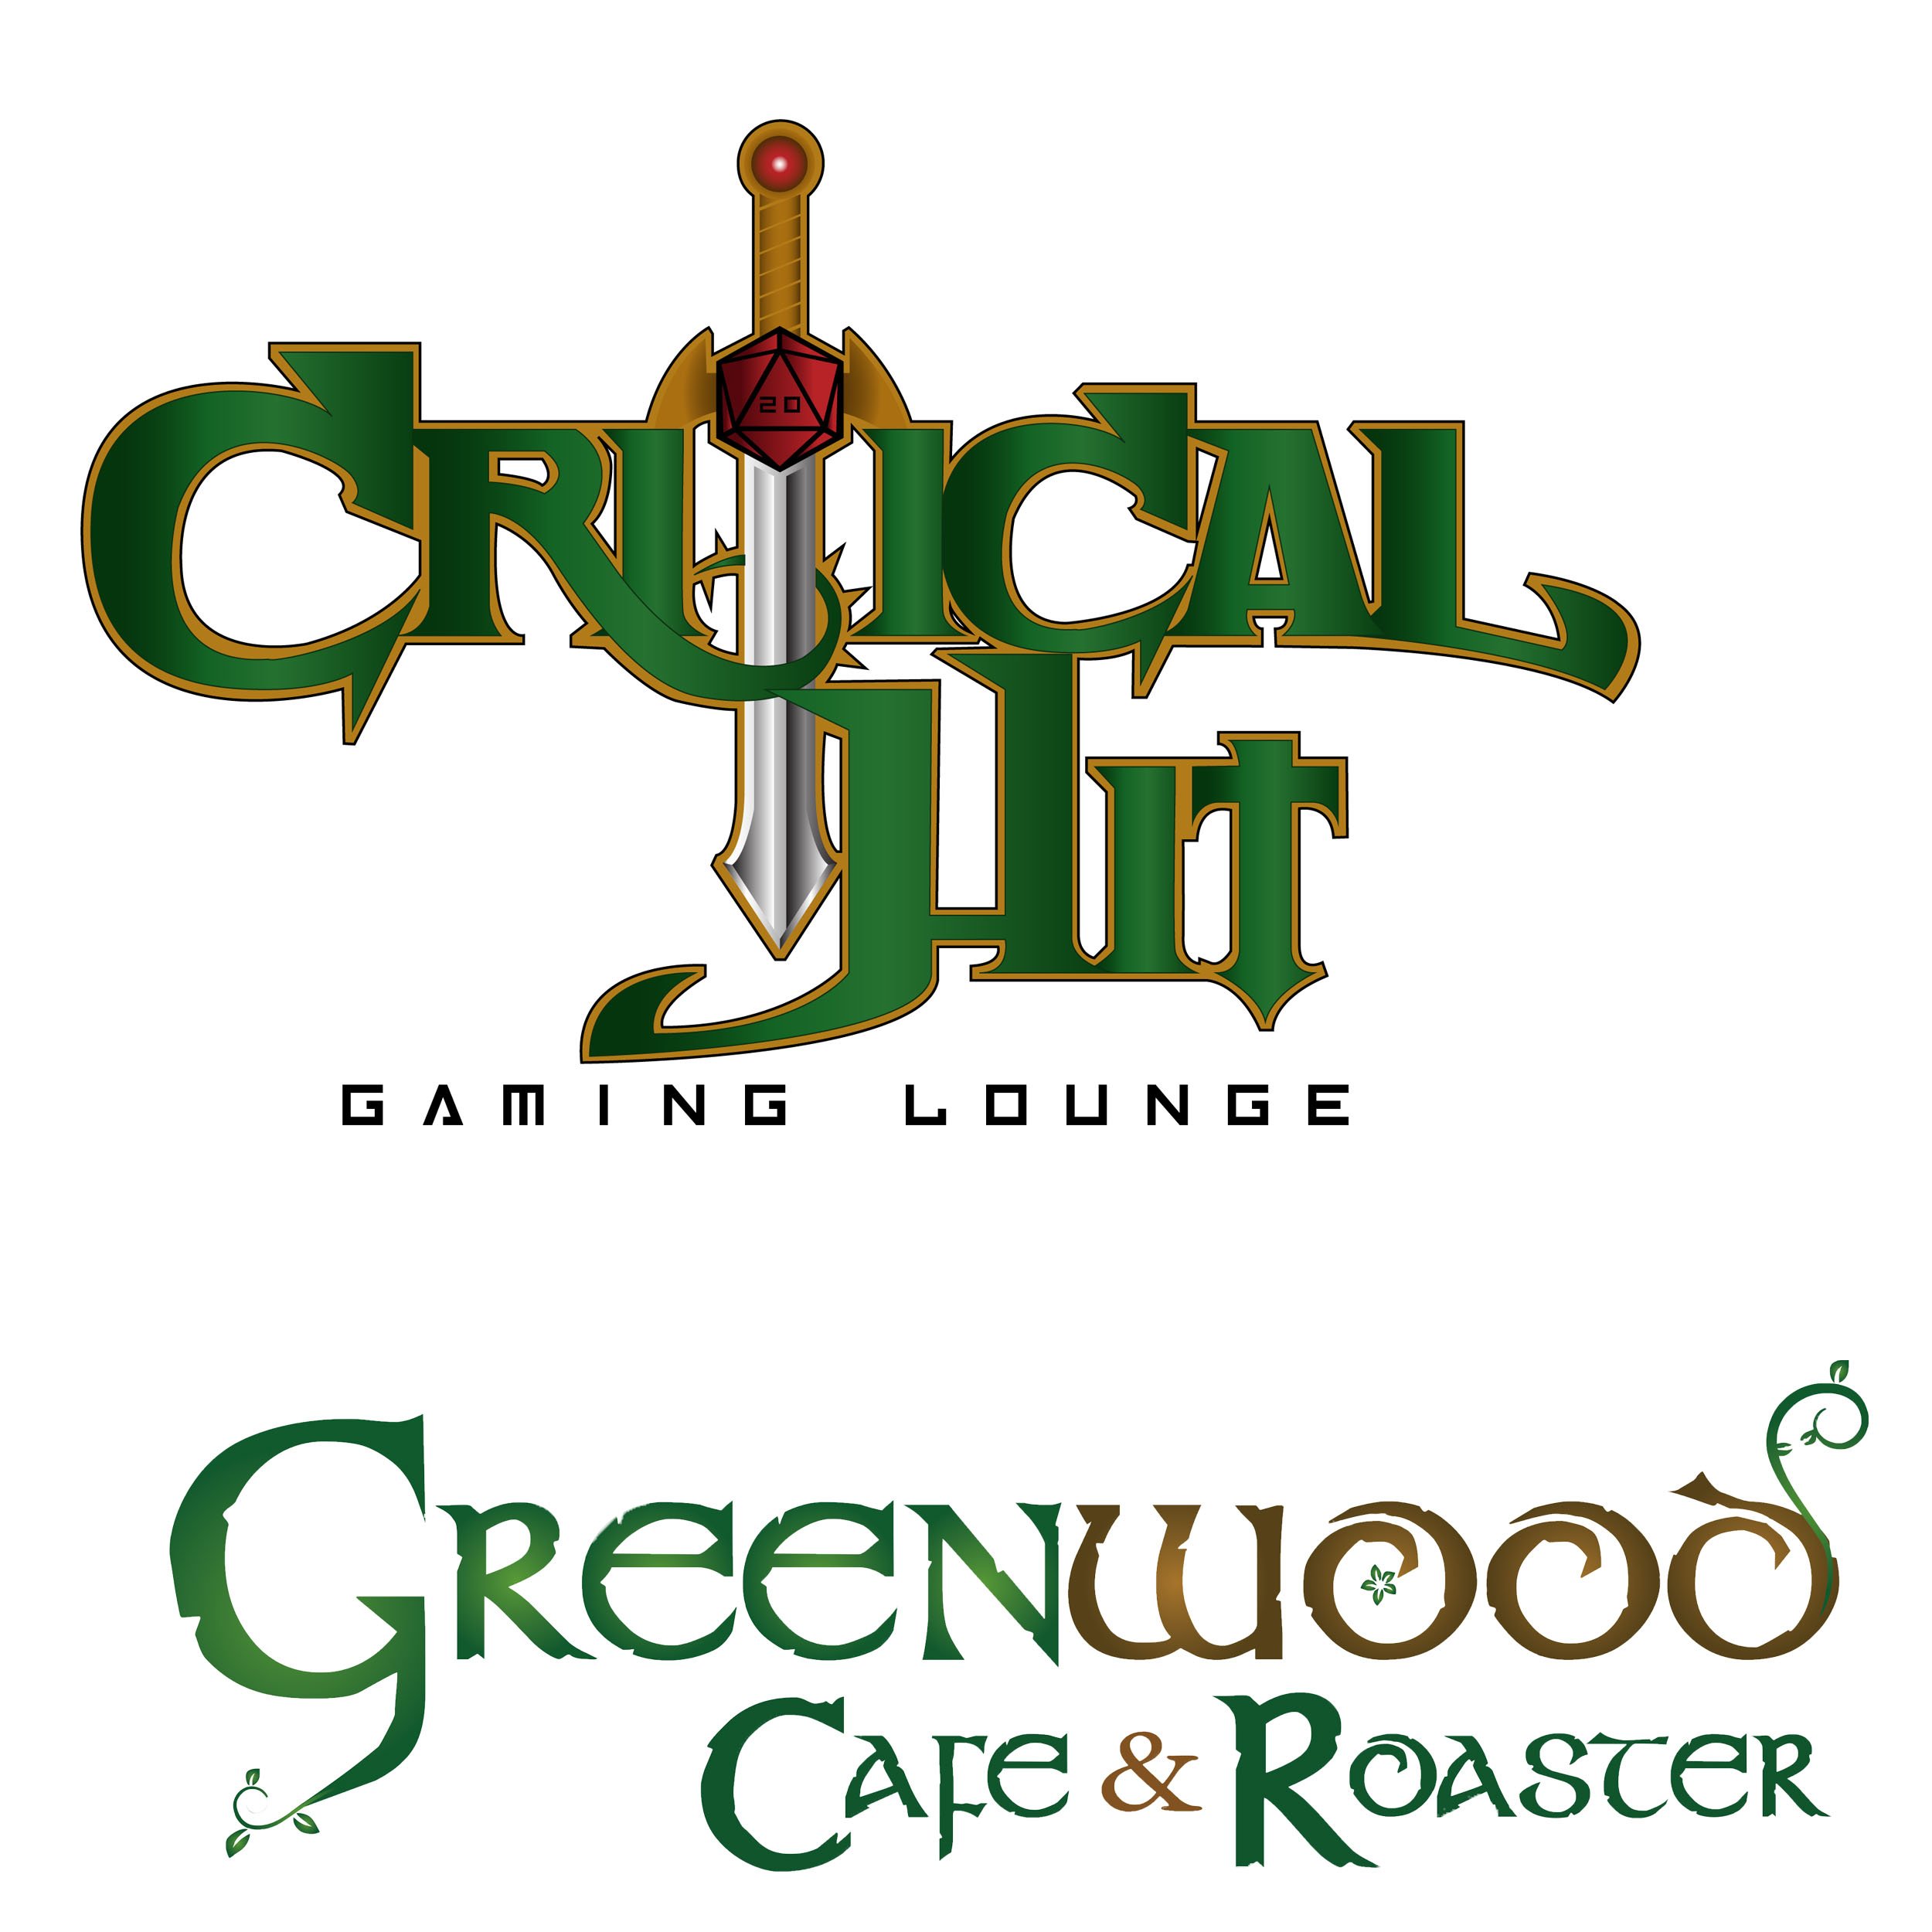 Greenwood Cafe & Roaster logo